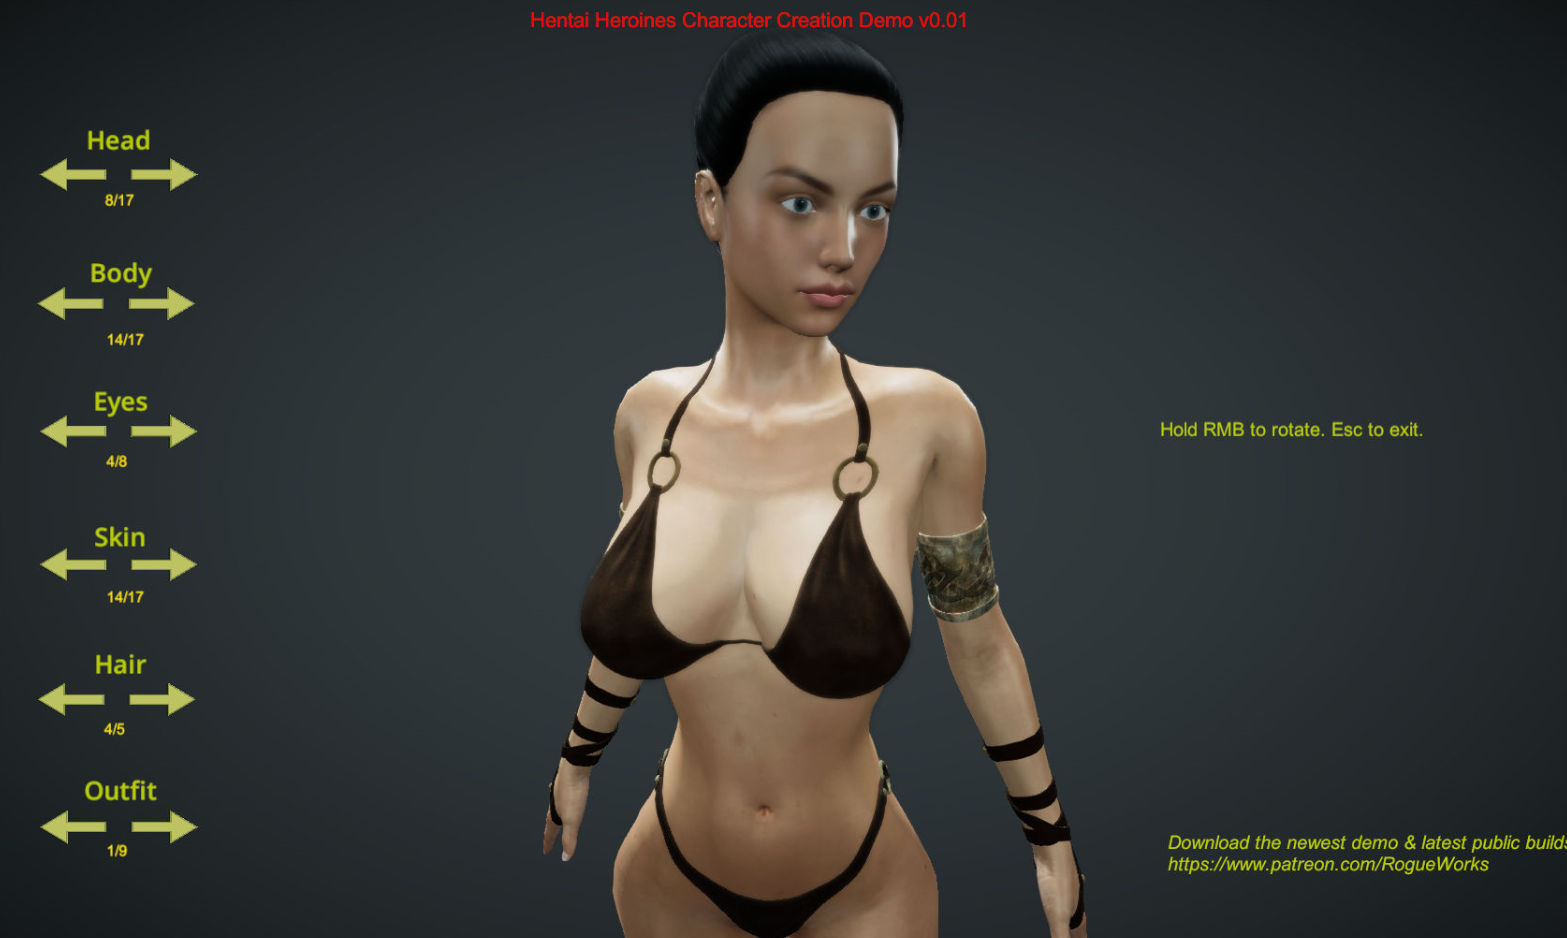 RogueWorks - Hentai Heroines Character Creation Demo v0.1